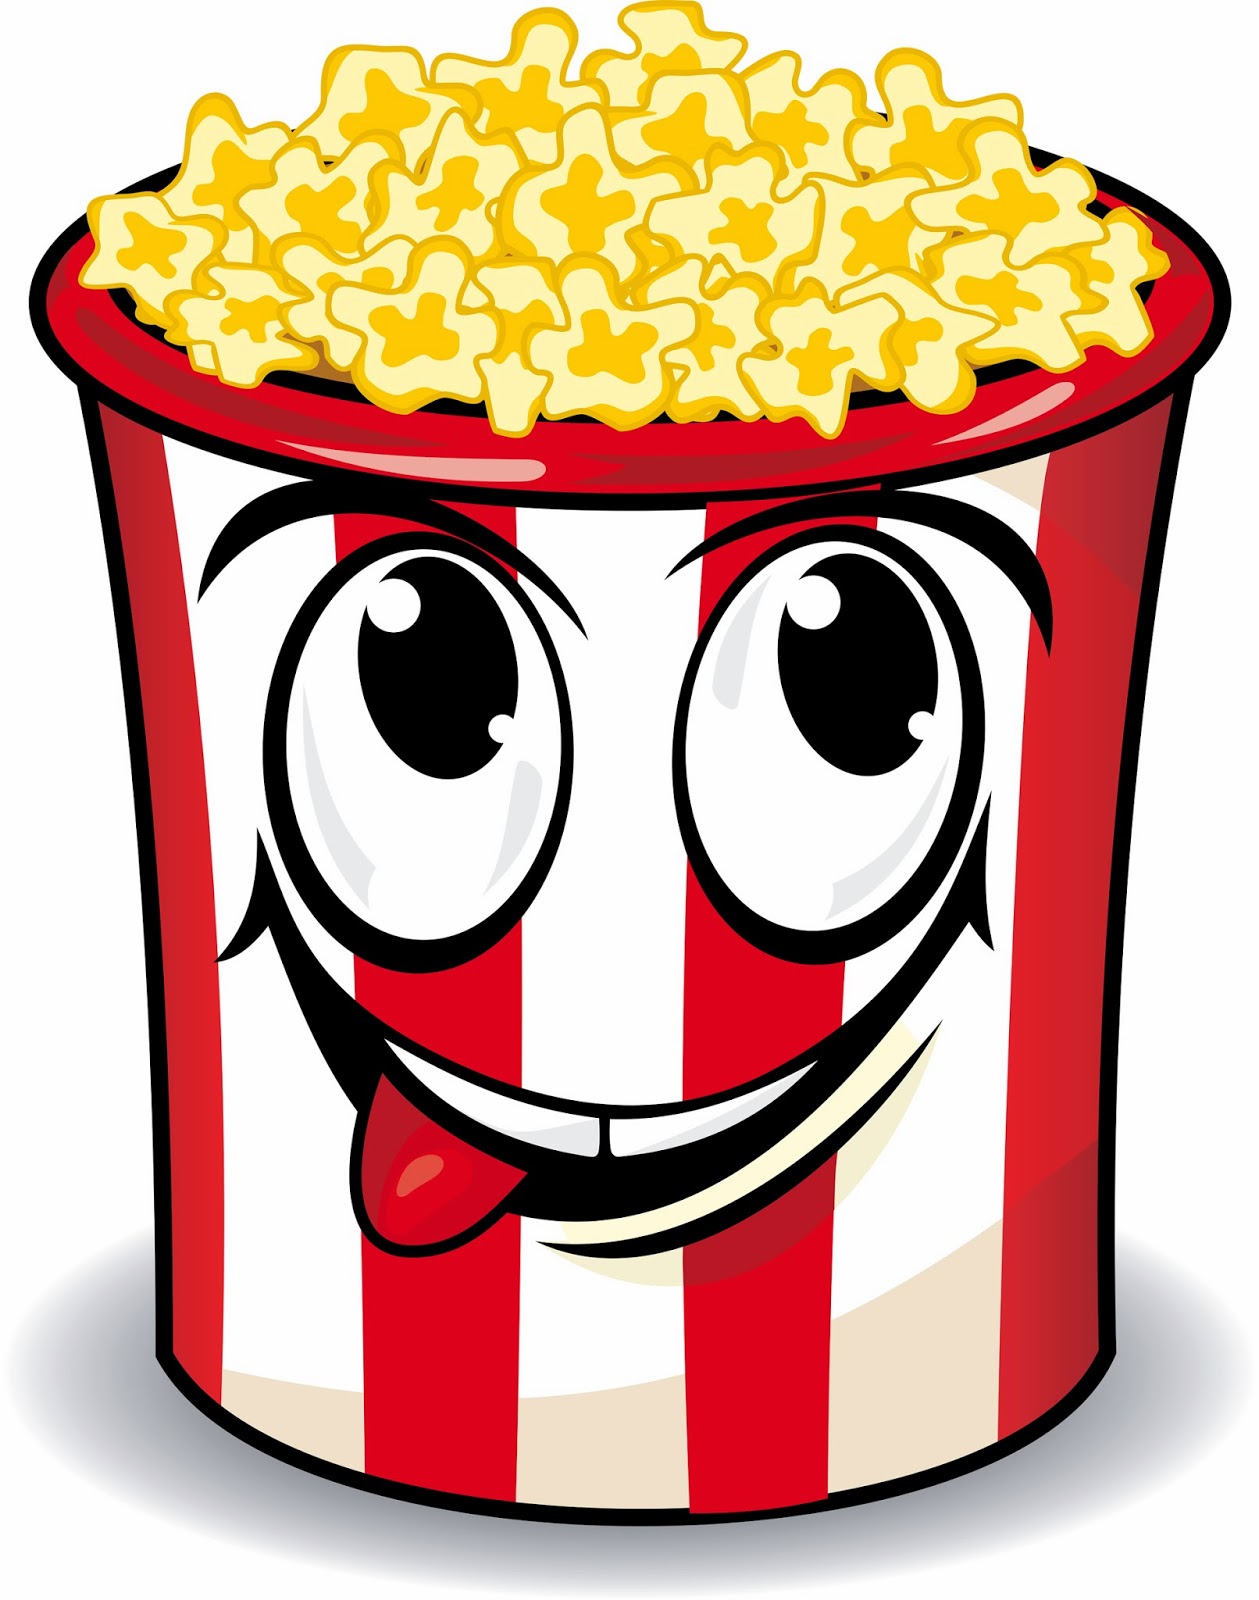 Popcorn joyful expressions jerry might be pregnant